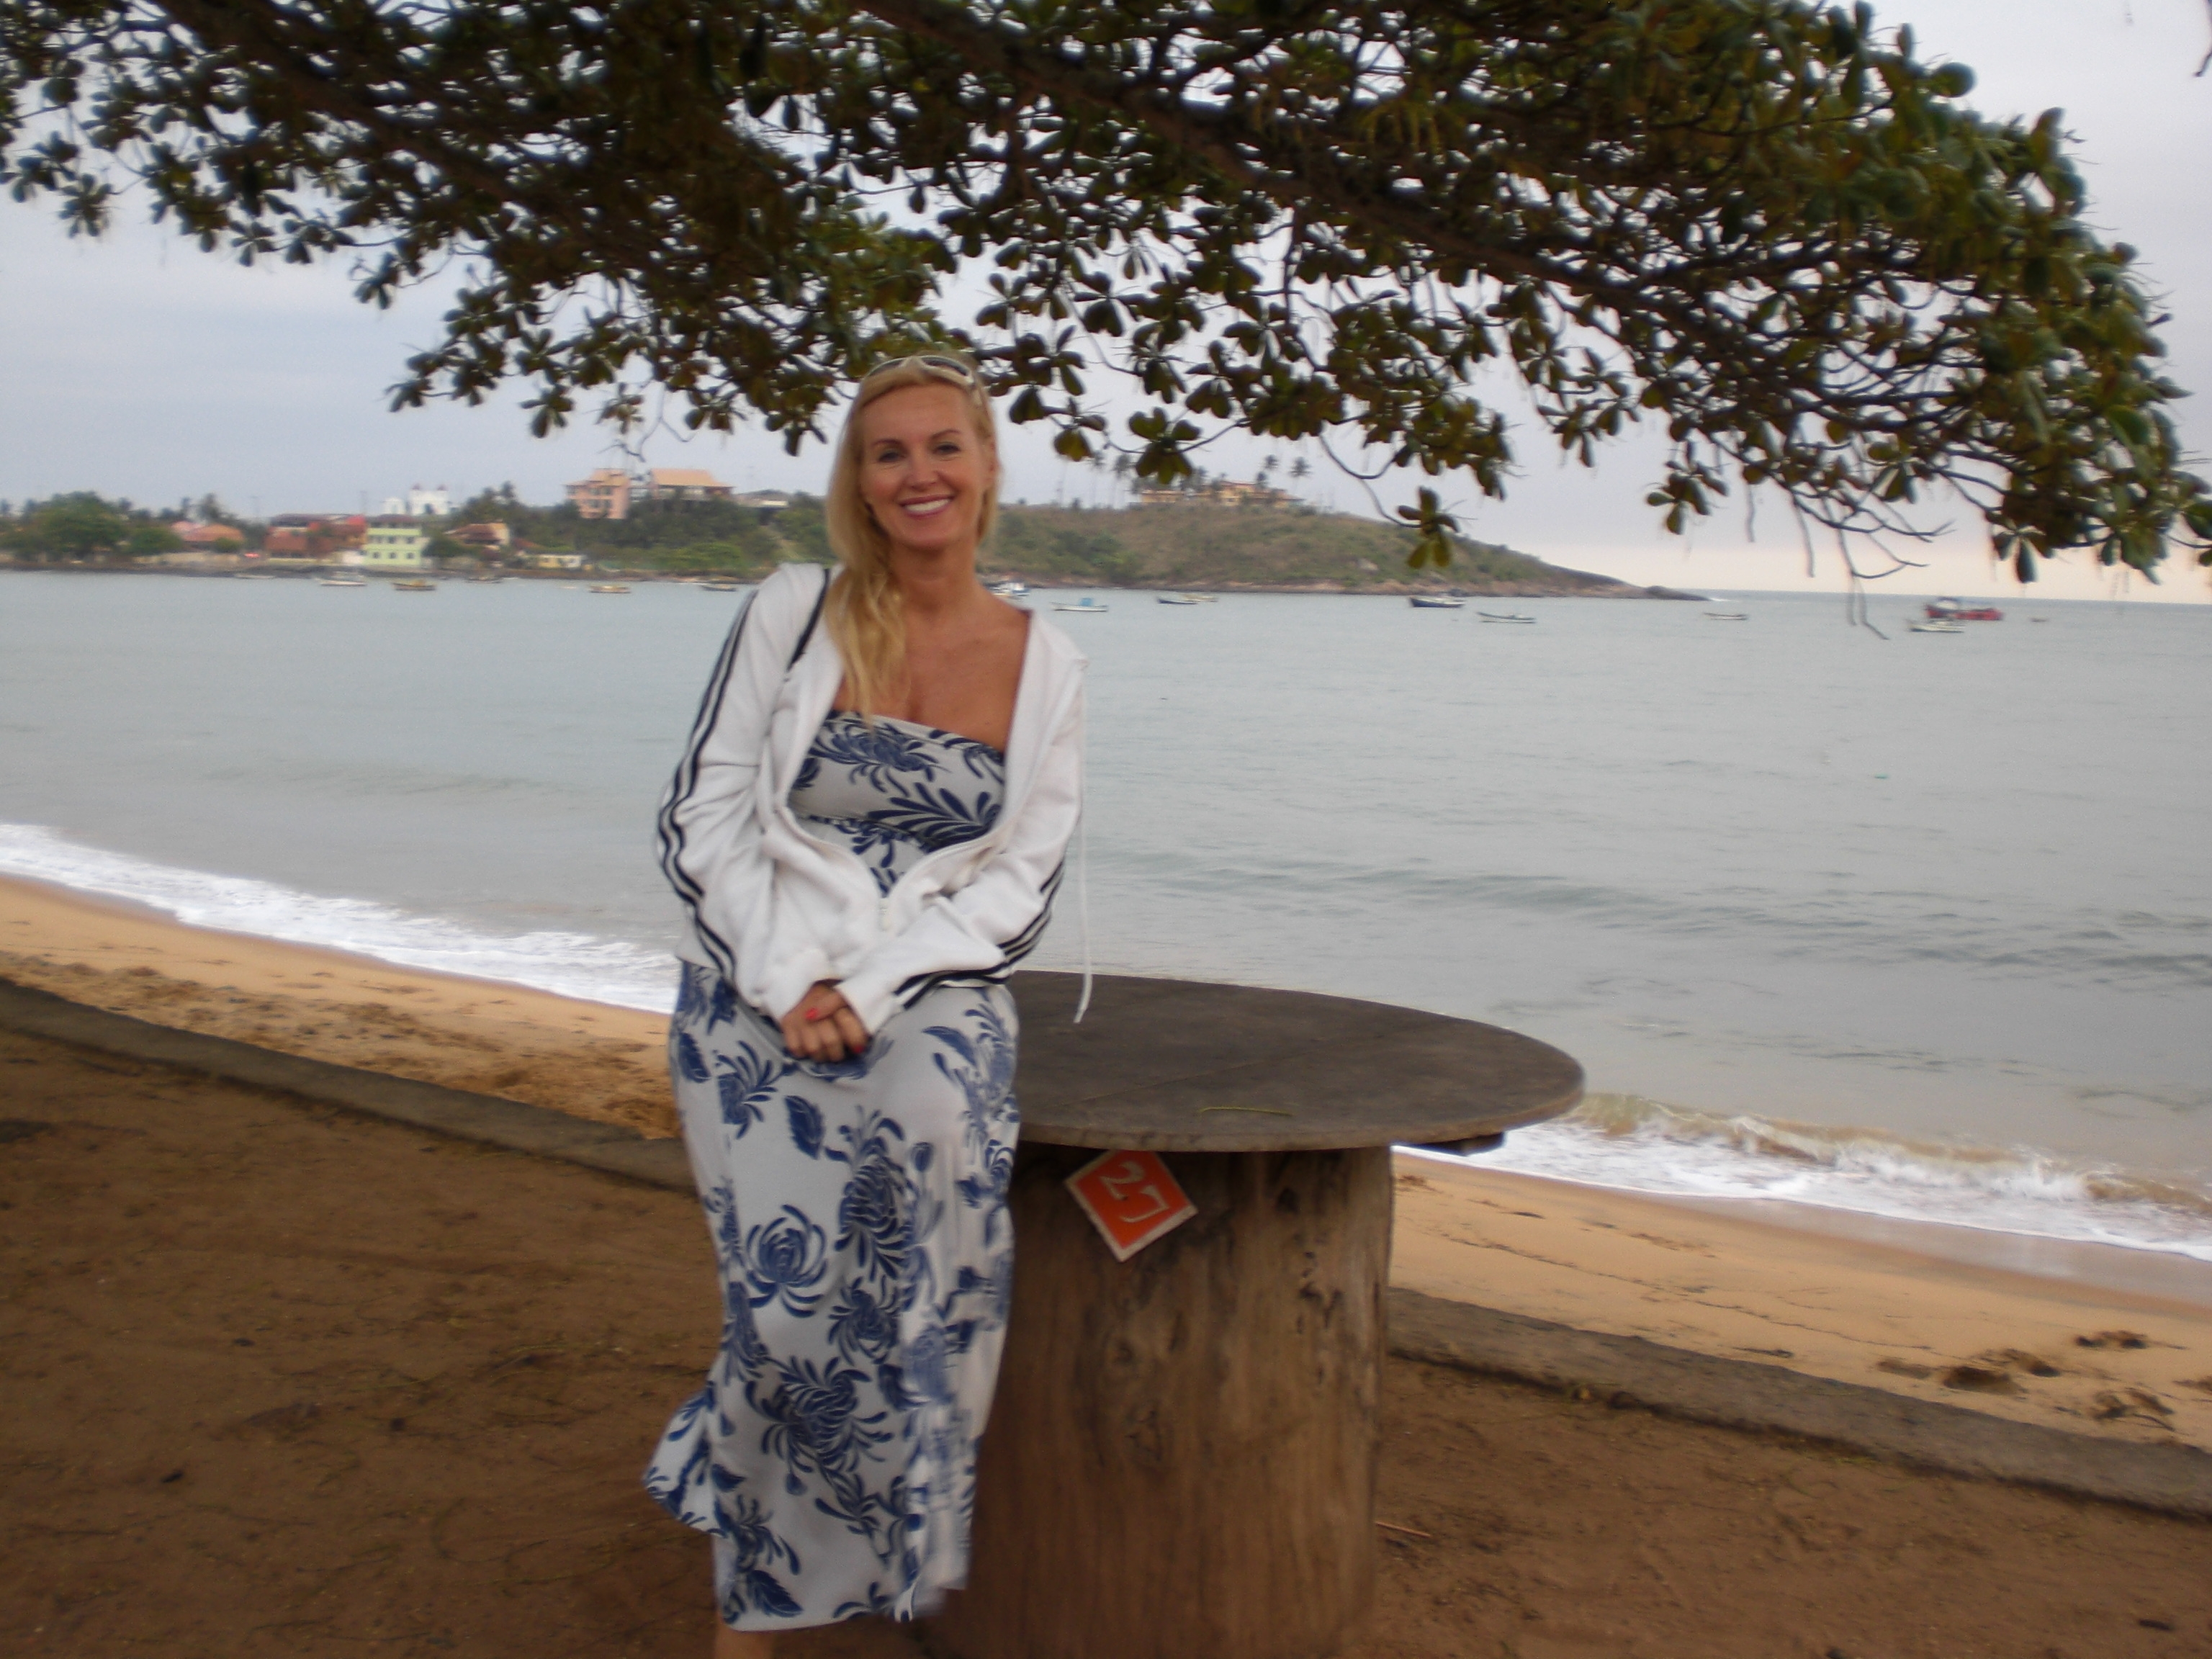 Beatrice de Borg location scouting in Brazil for 'The Sun Shines'